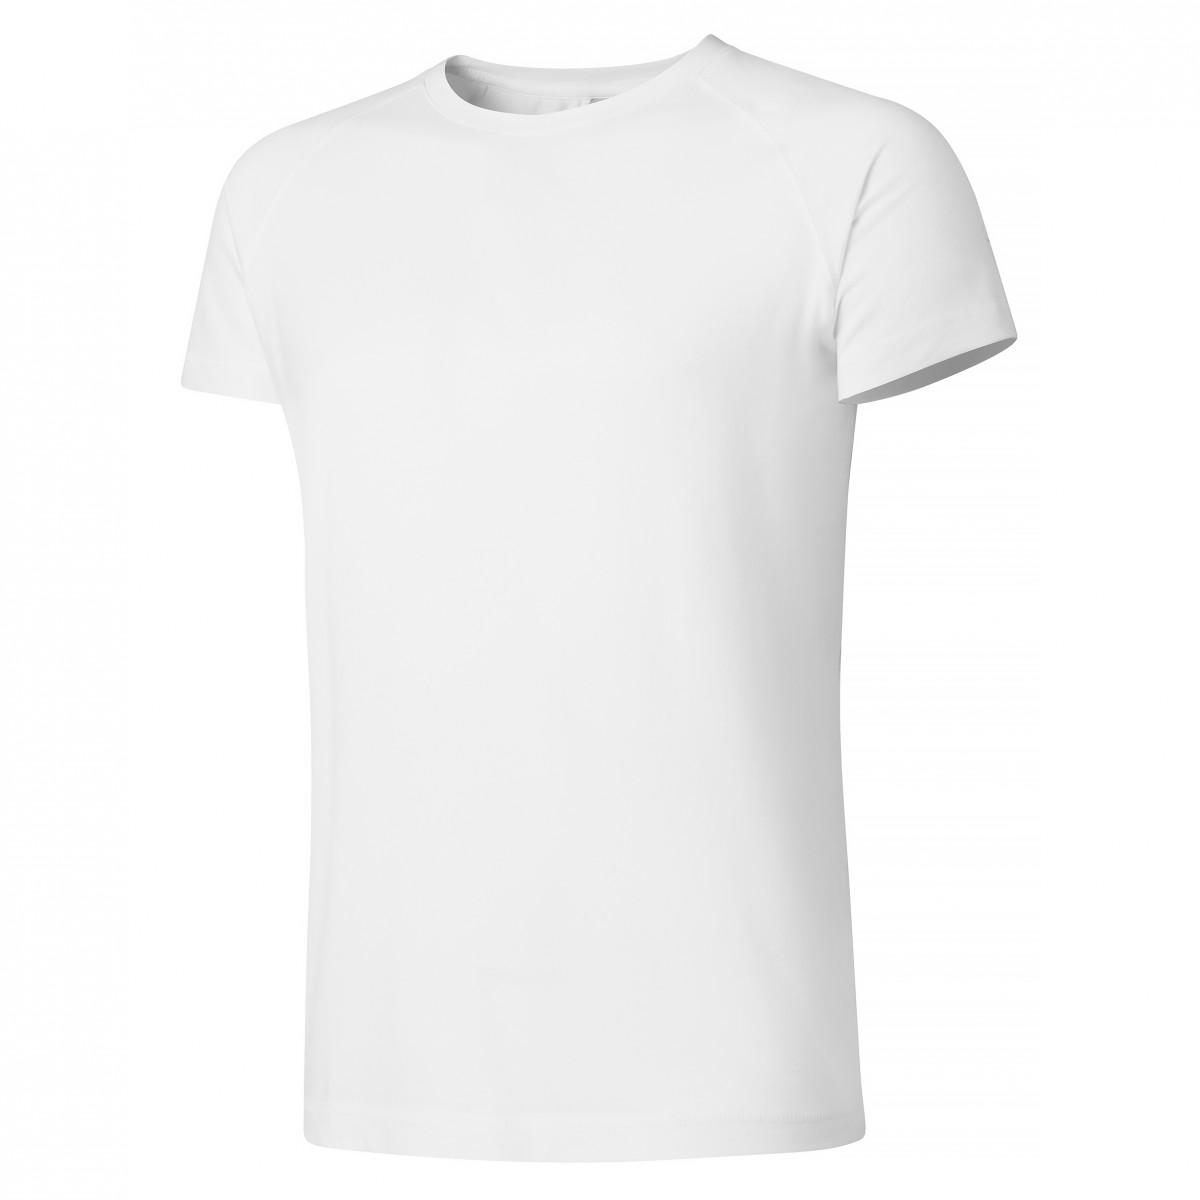 casall-graphic-korte-mouwen-t-shirt